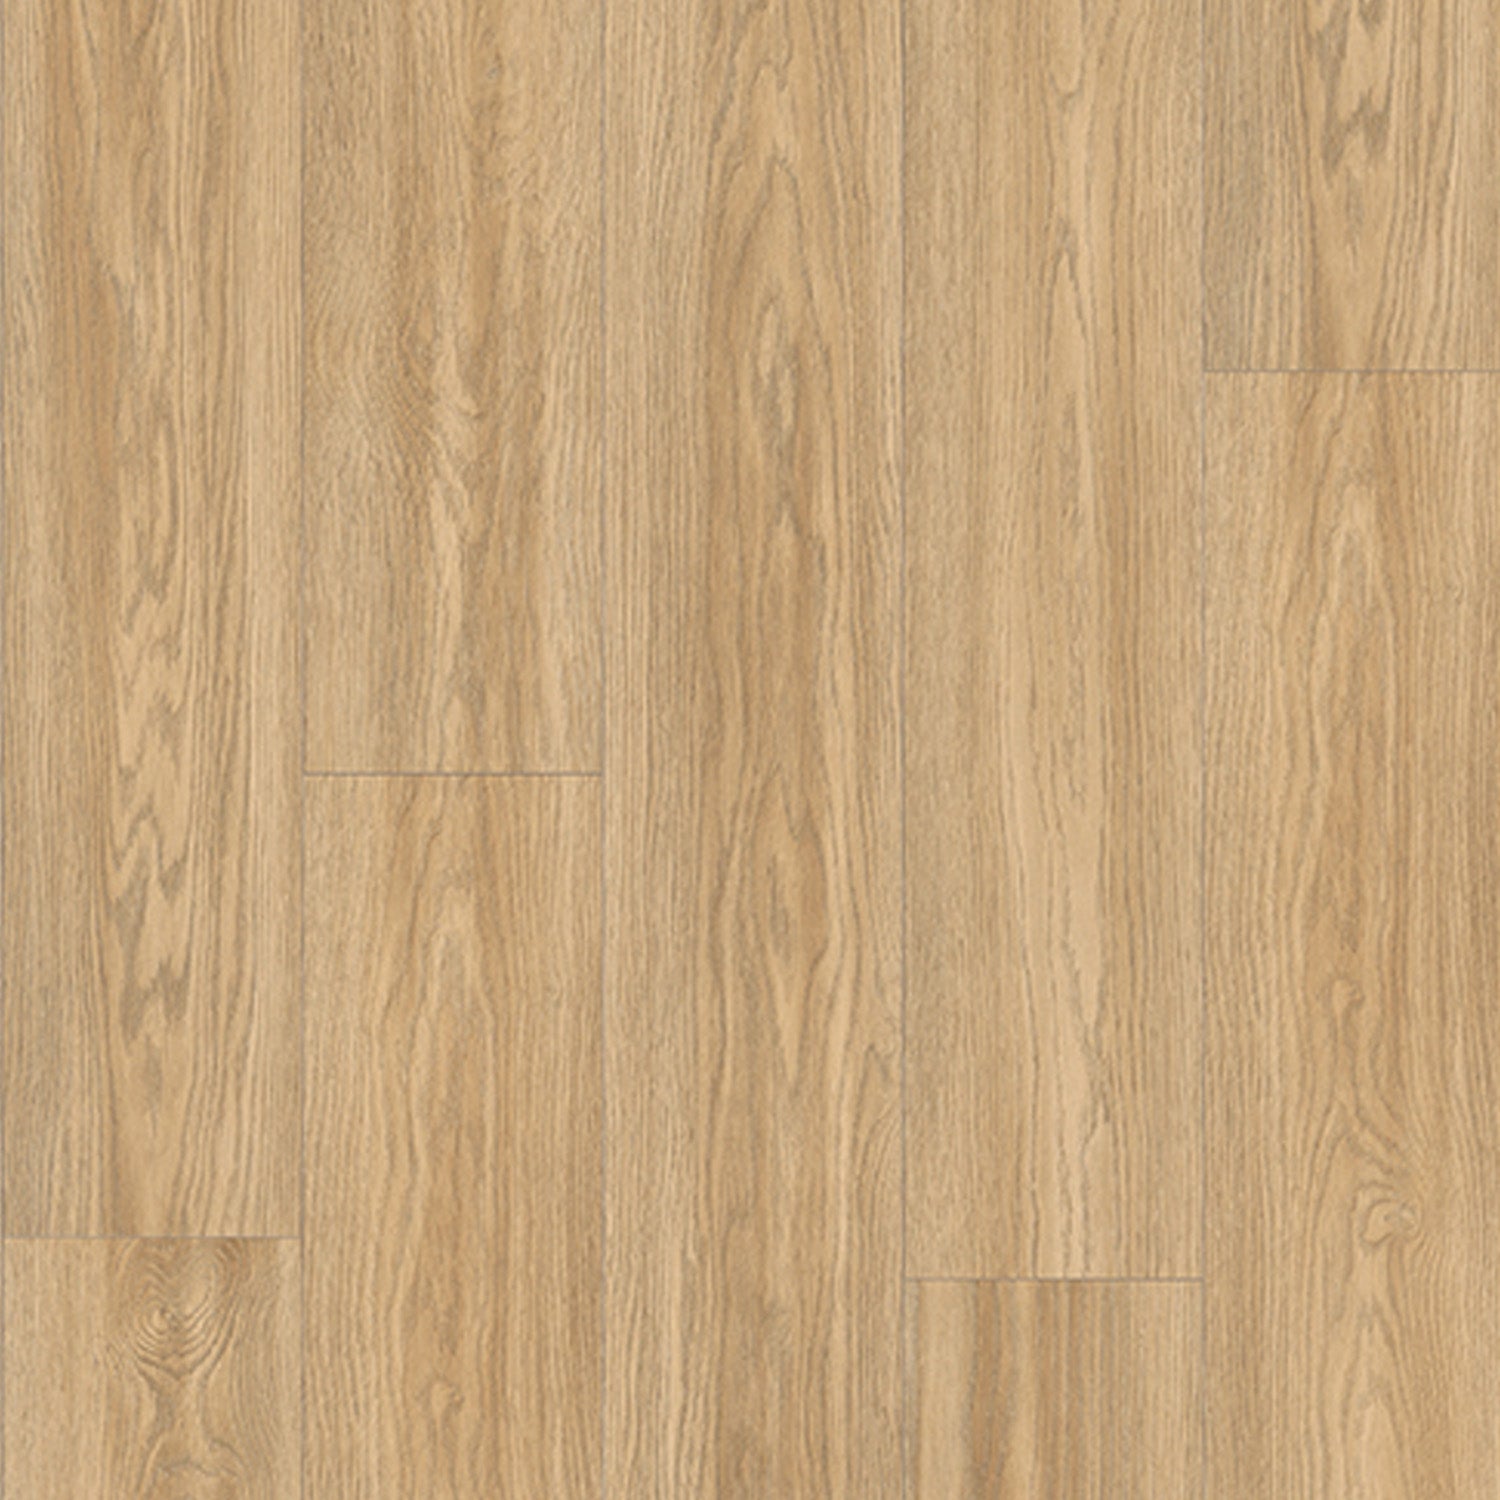 Natural Soria Oak Laminate Flooring